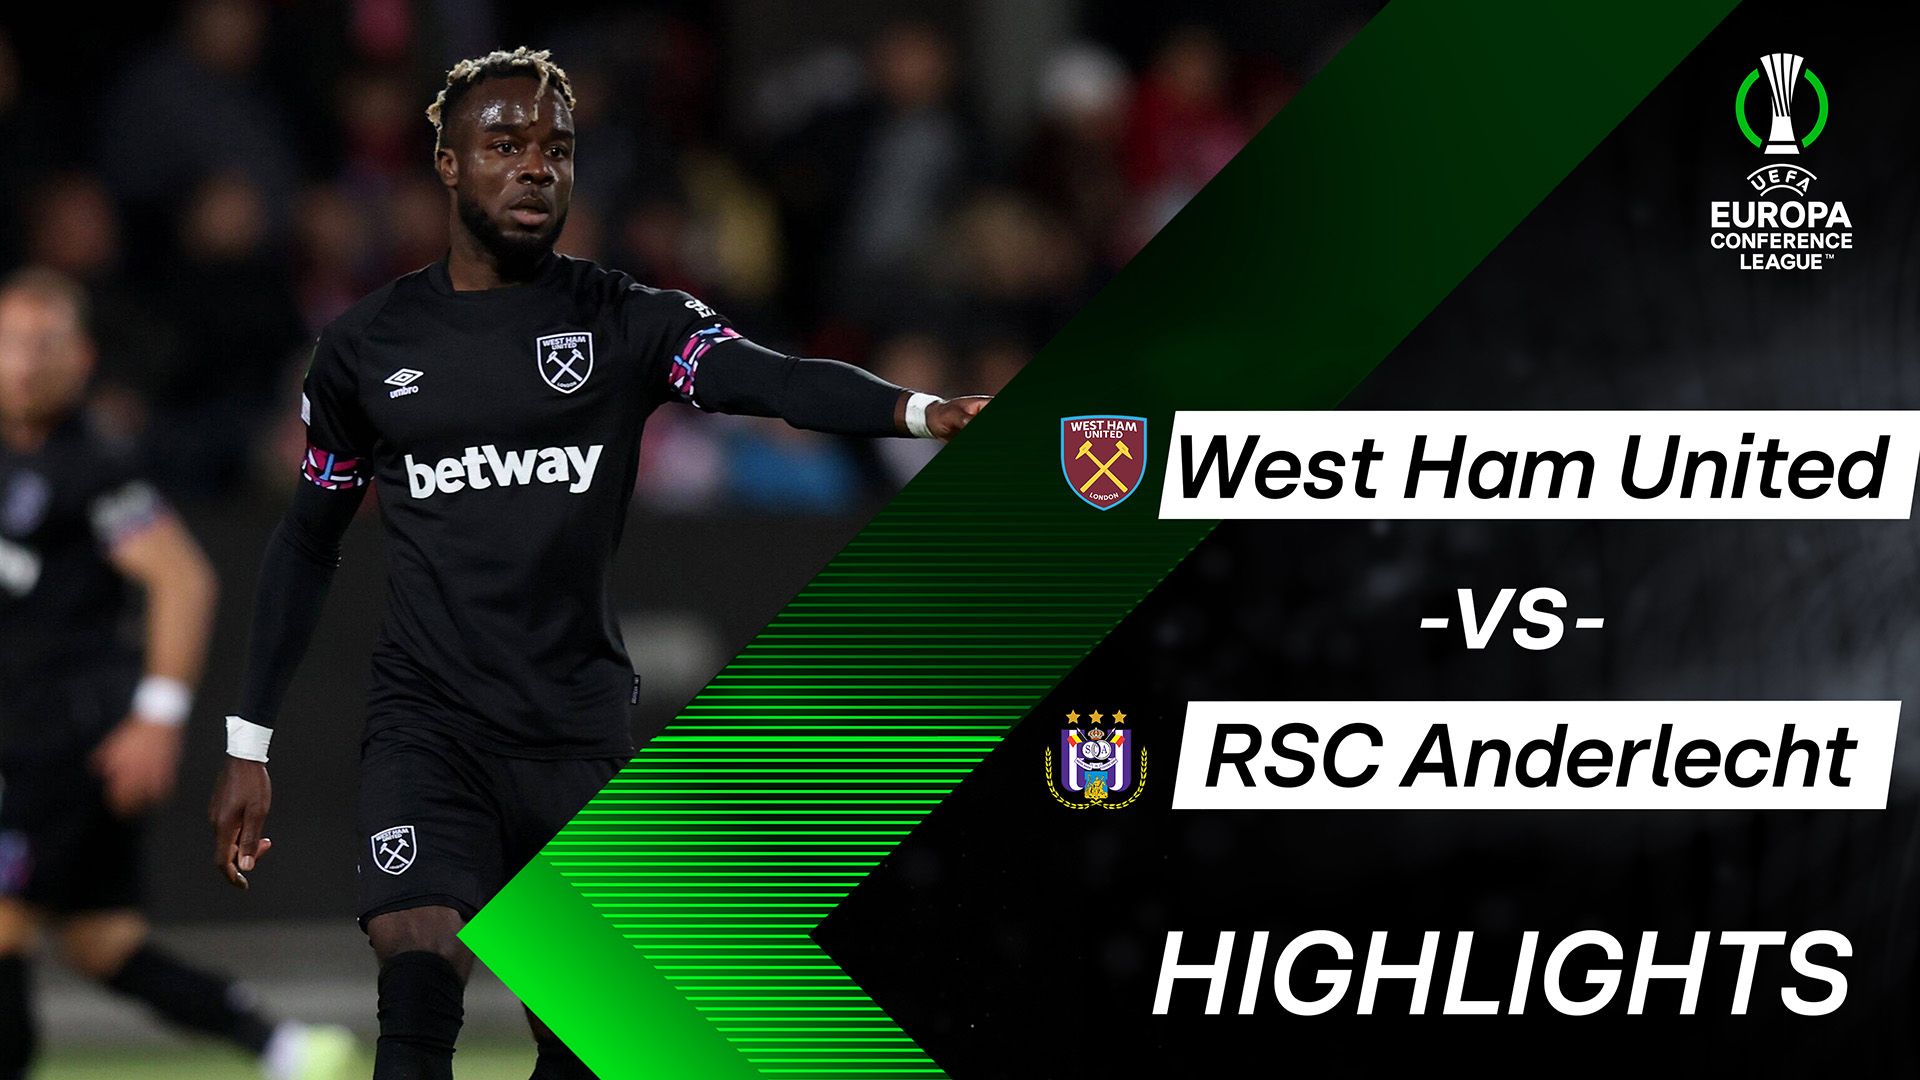 Highlights: West Ham United vs. RSC Anderlecht